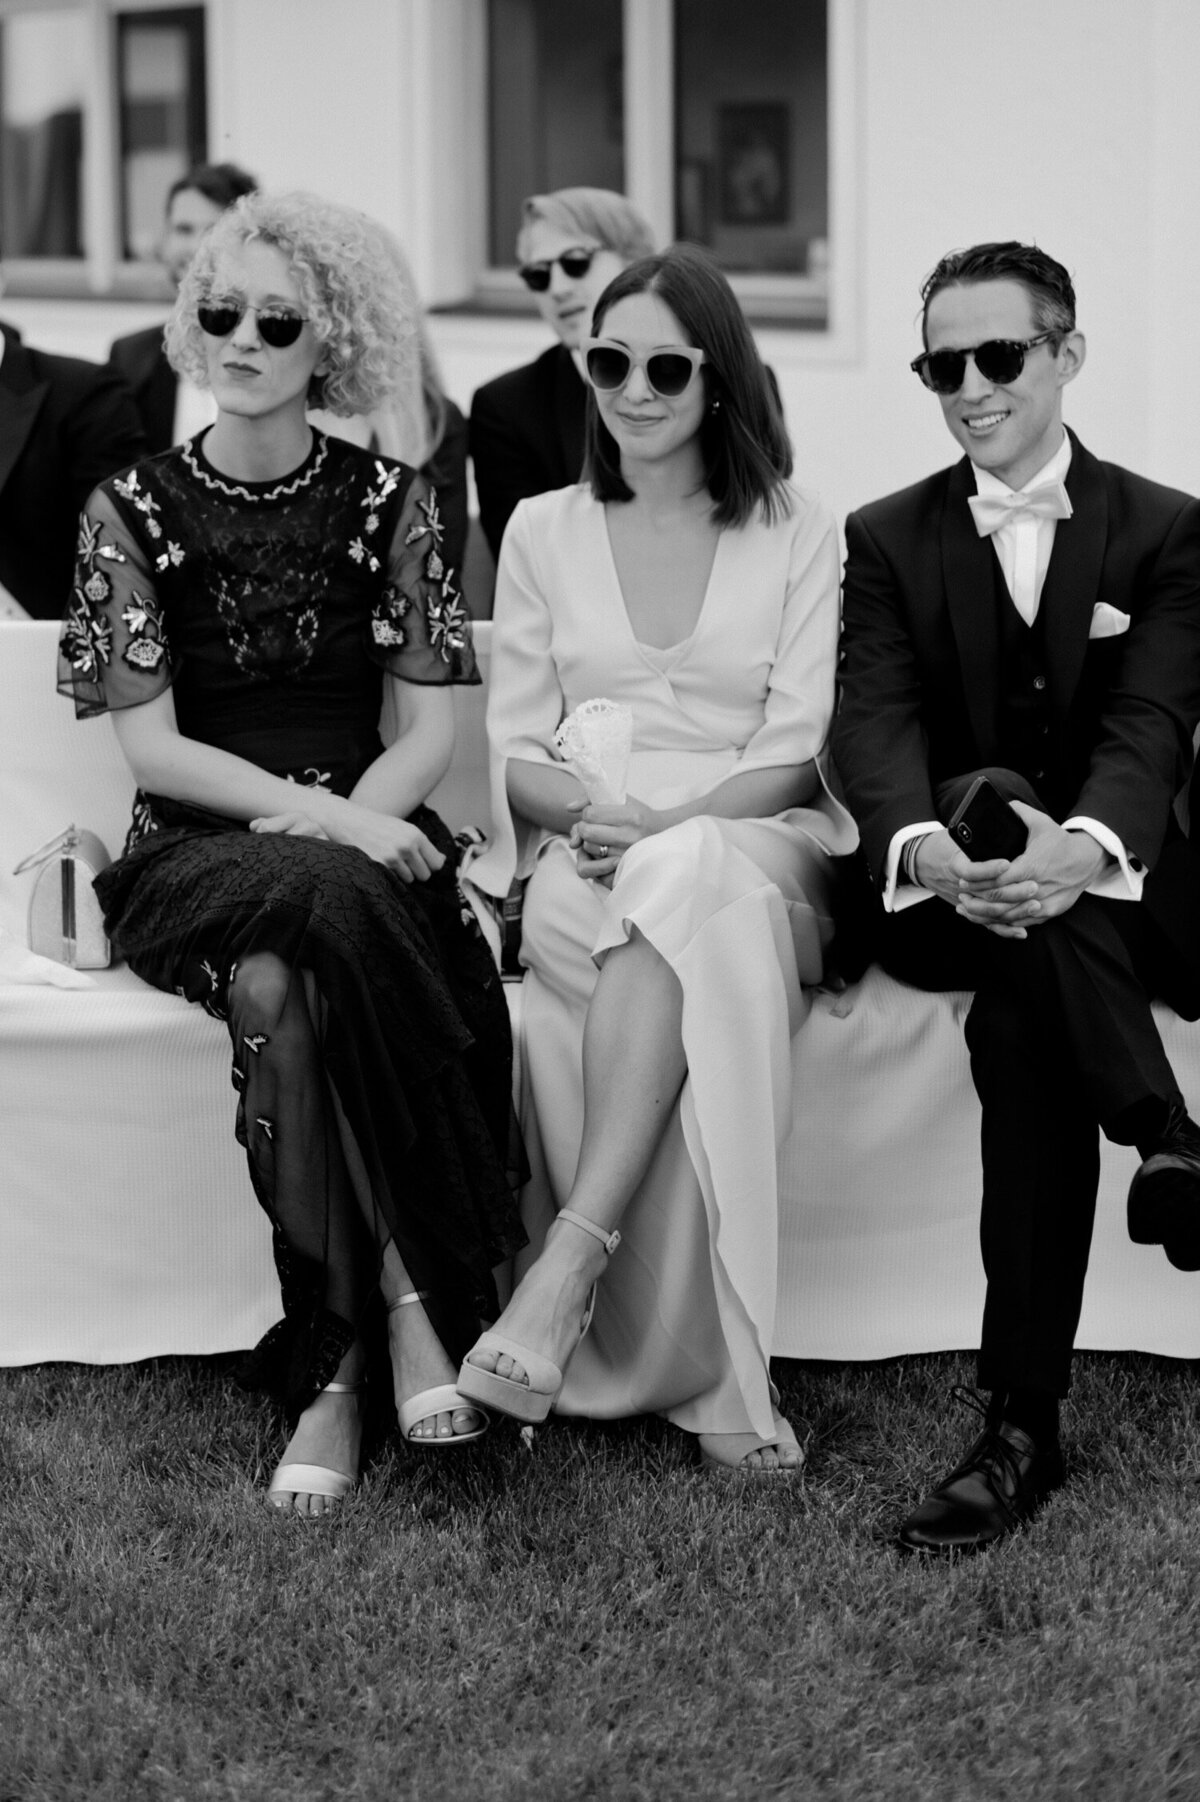 086_Austria_Luxury_Wedding_Photographer (86 von 216)_Flora and Grace is a luxury wedding photographer for stylish and elegant weddings.